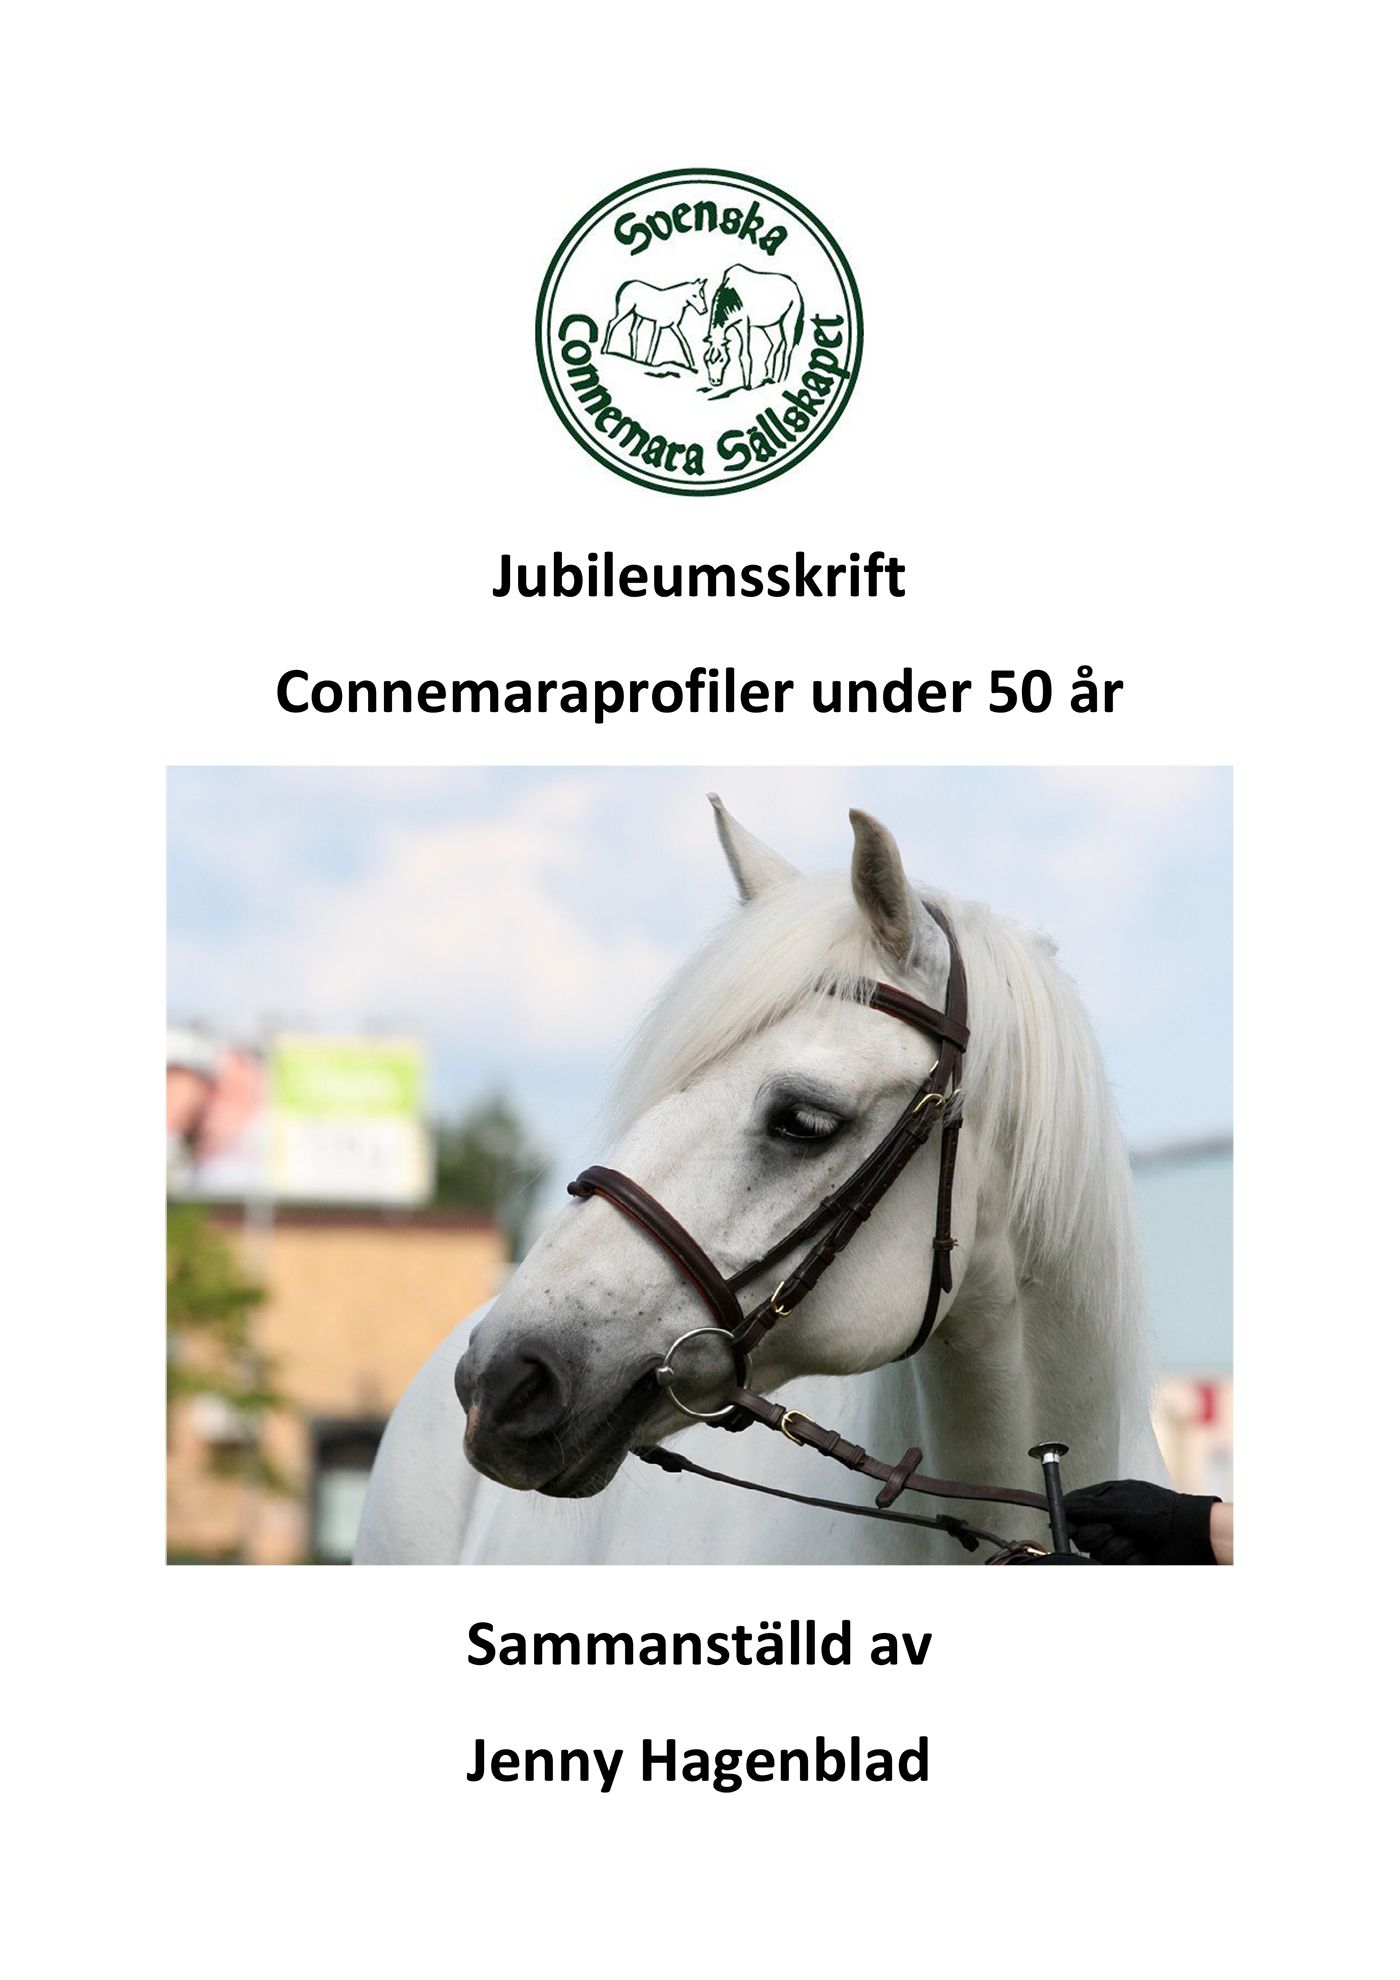 Jubileumsskrift - Connemaraprofiler under 50 år, e-bok av Svenska Connemarasällskapet